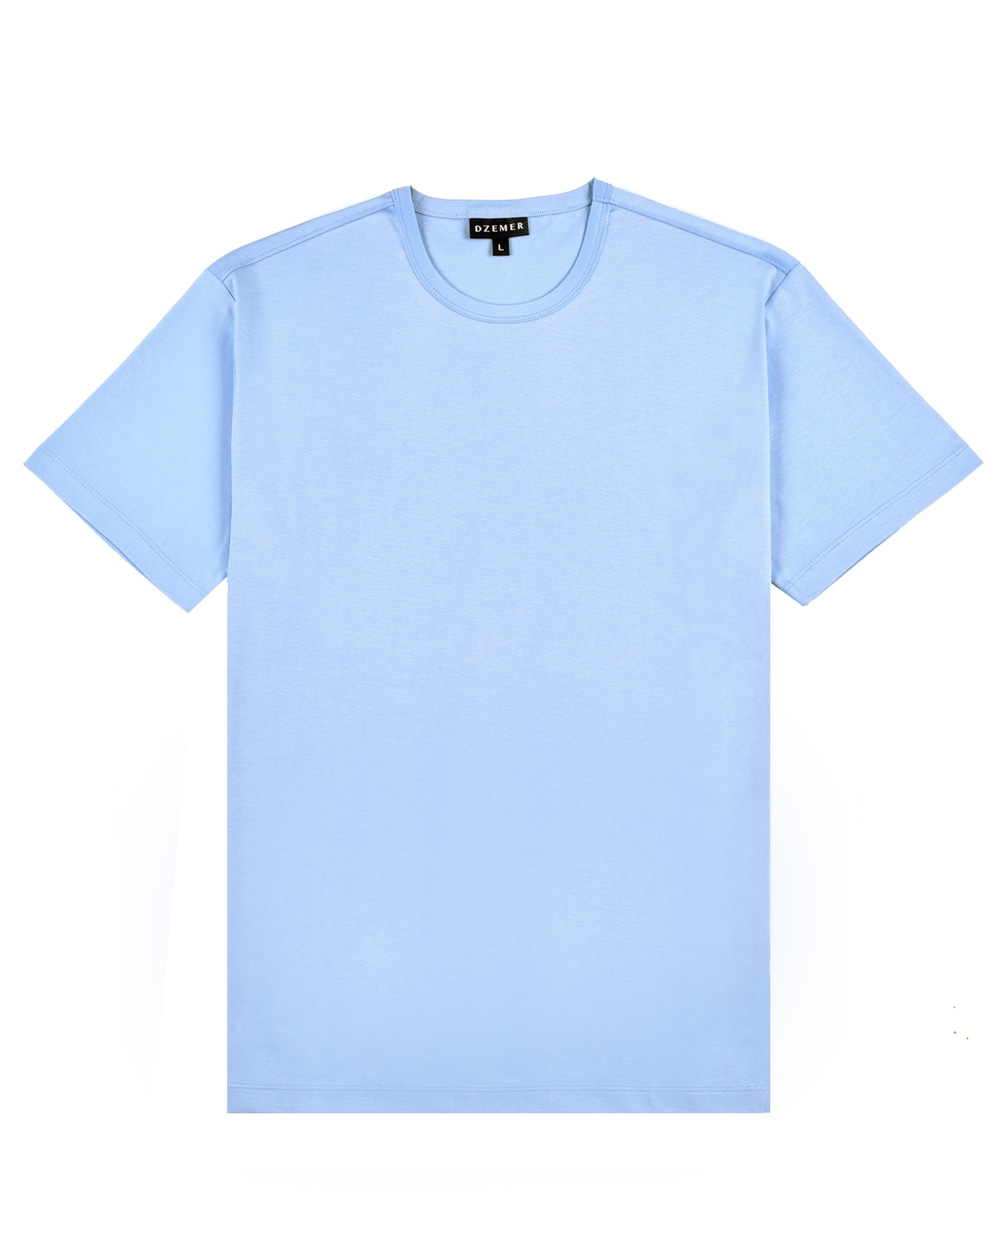 Cosimo classic T-shirts sky blueDzemer드제메르